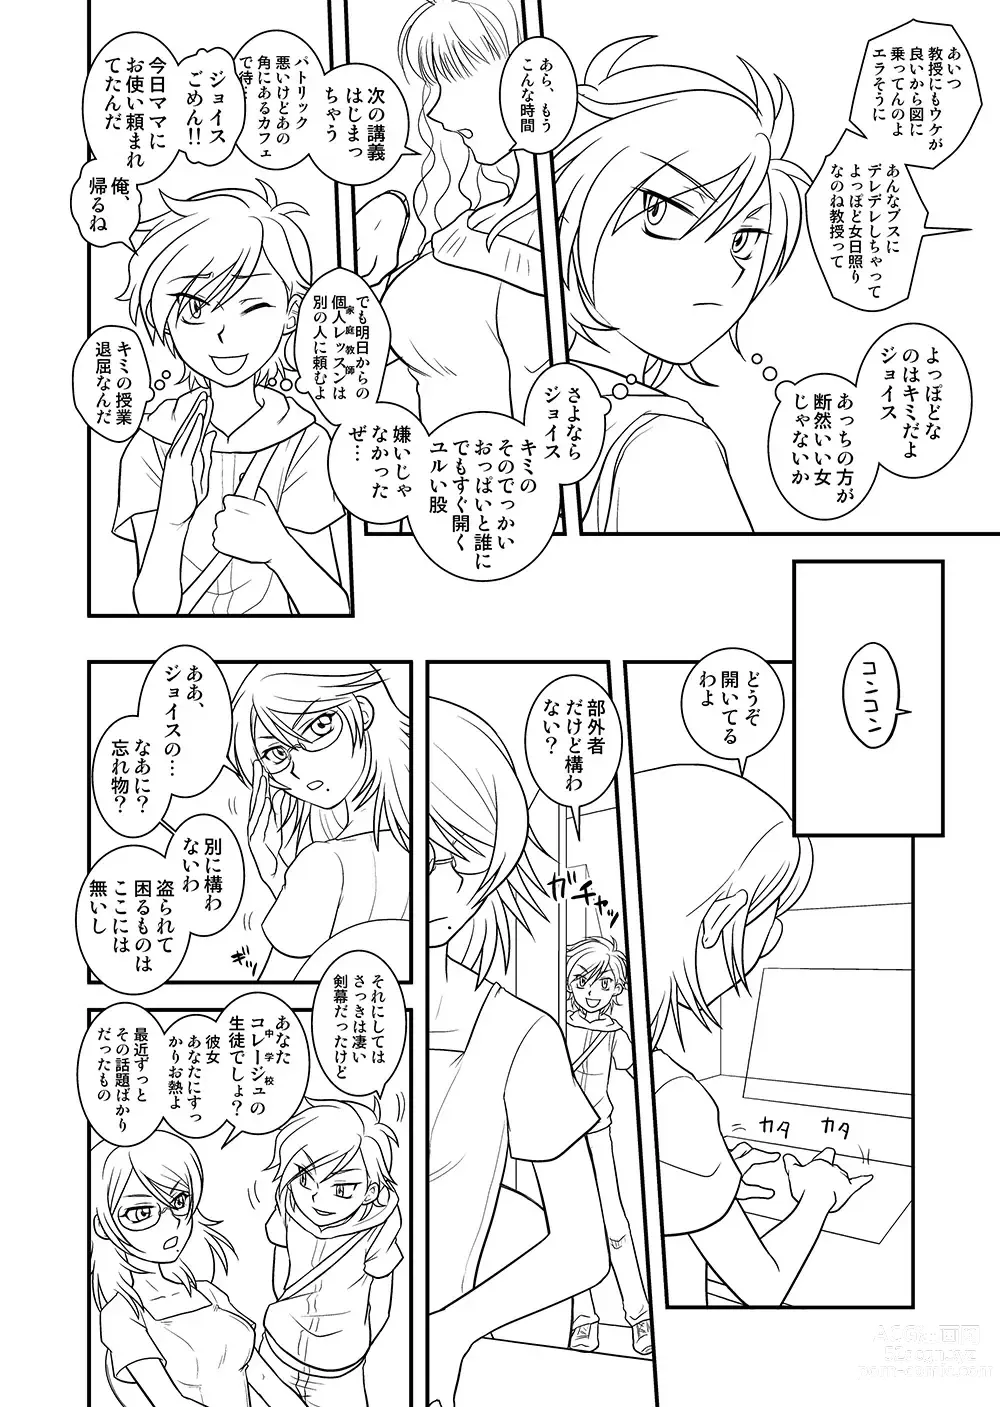 Page 5 of doujinshi Taisa to Ore.